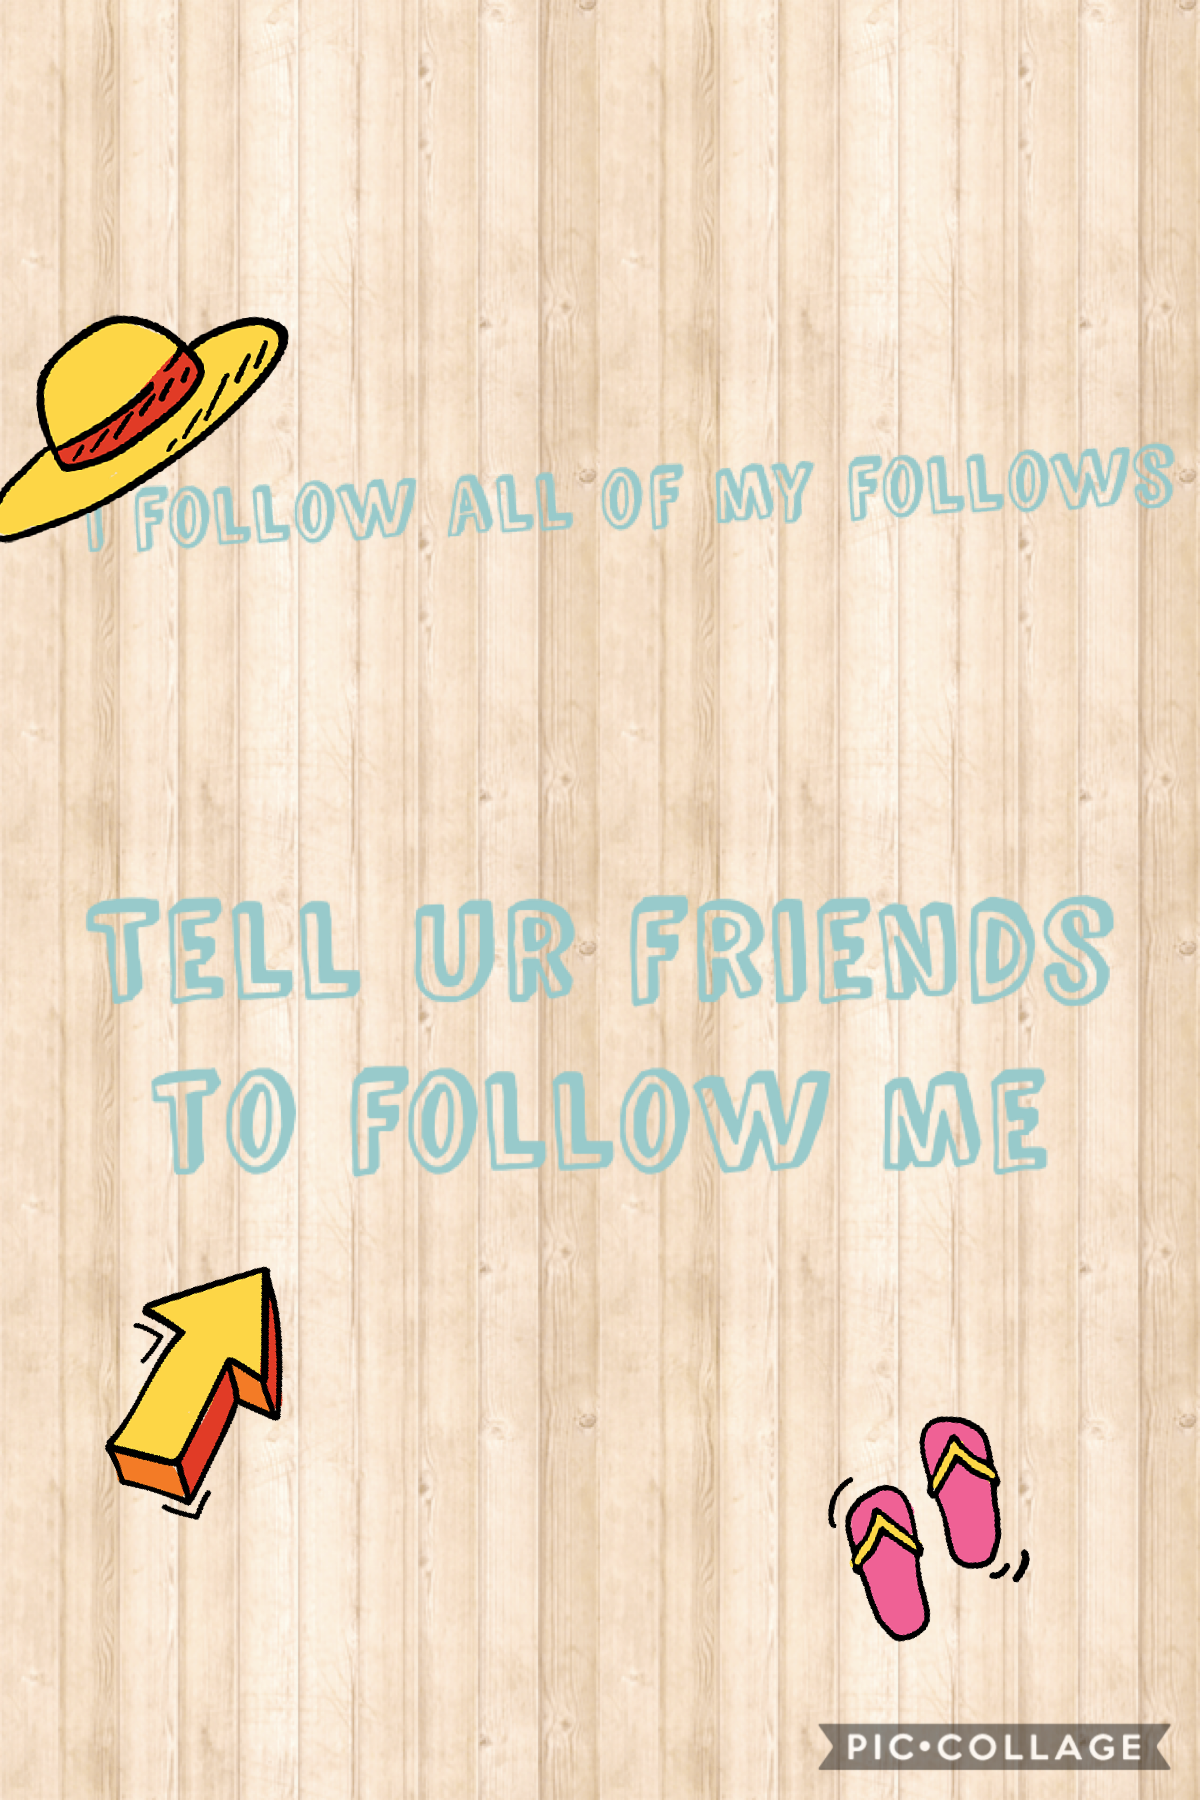 Pls tell ur friends to follow me (I follow all of my follows ) 


#pls like And follow 